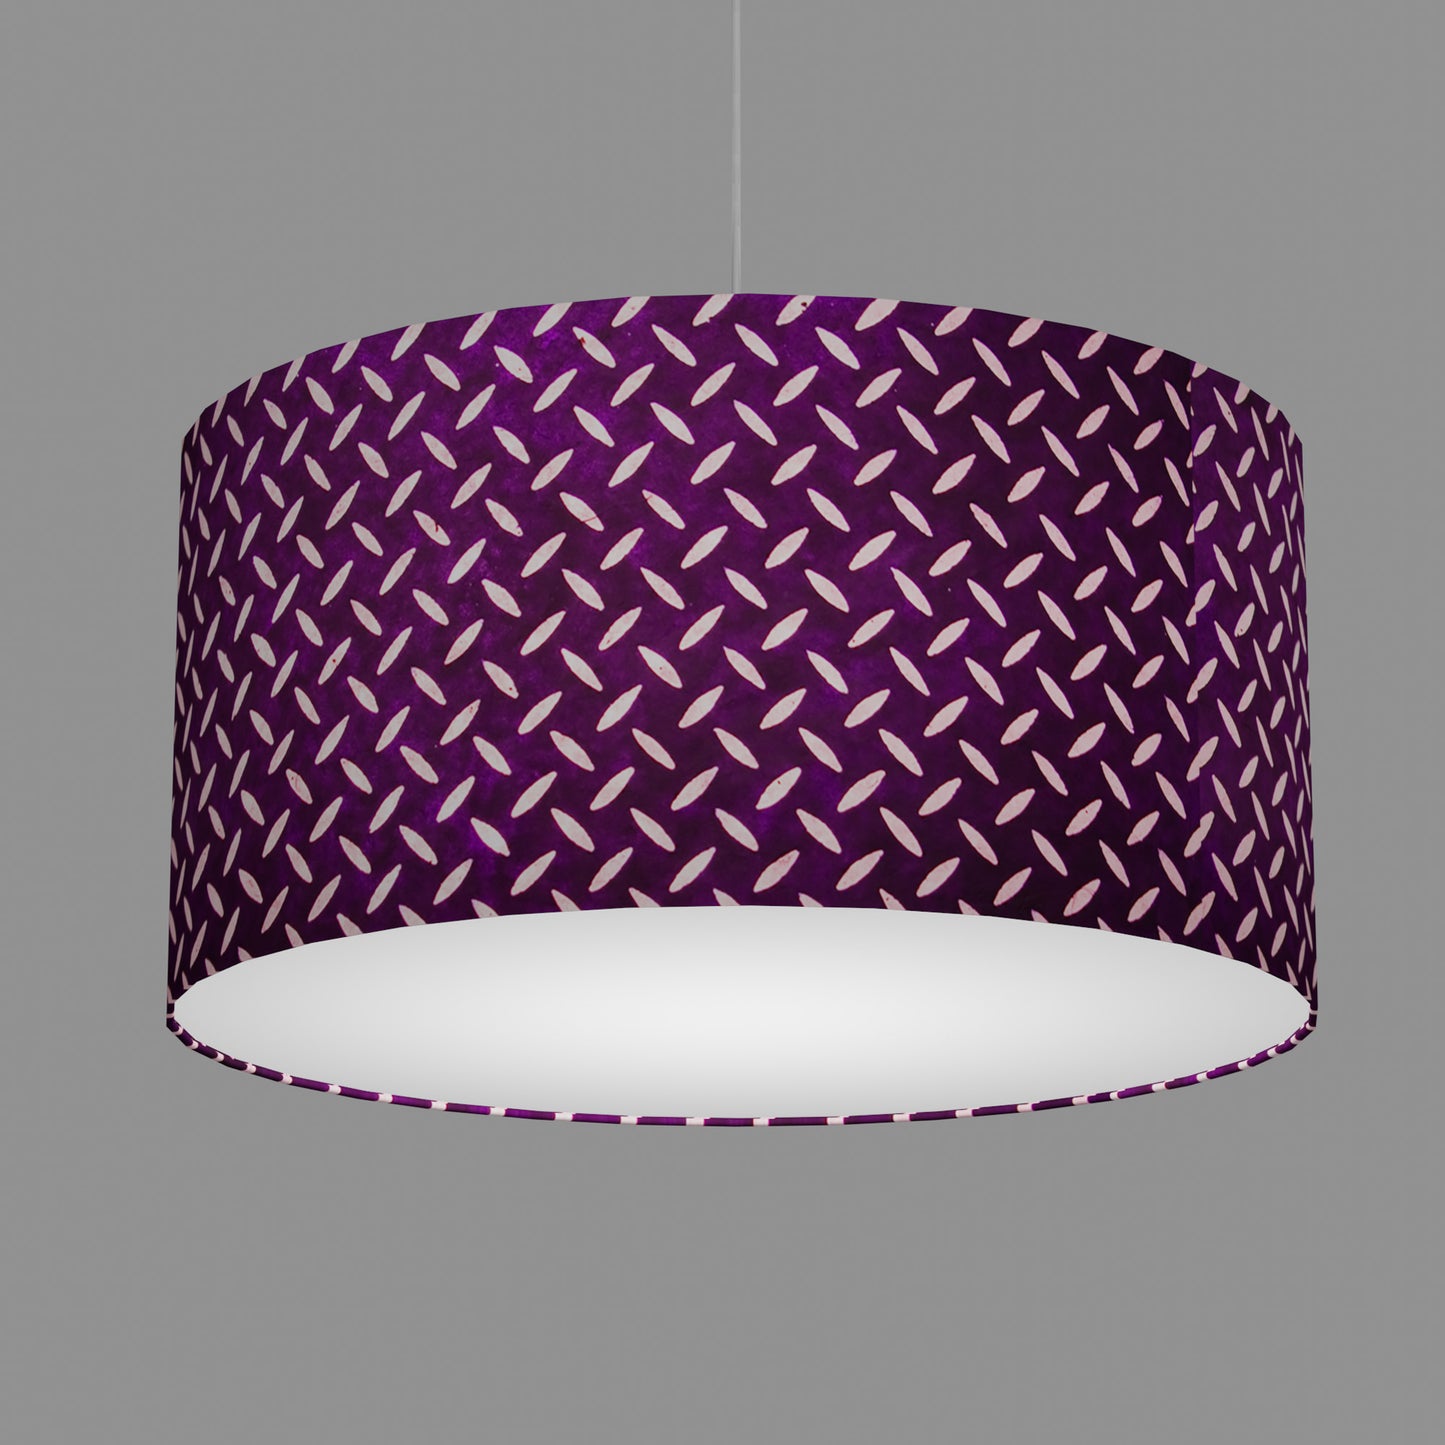 Drum Lamp Shade - P13 - Batik Tread Plate Purple, 60cm(d) x 30cm(h)